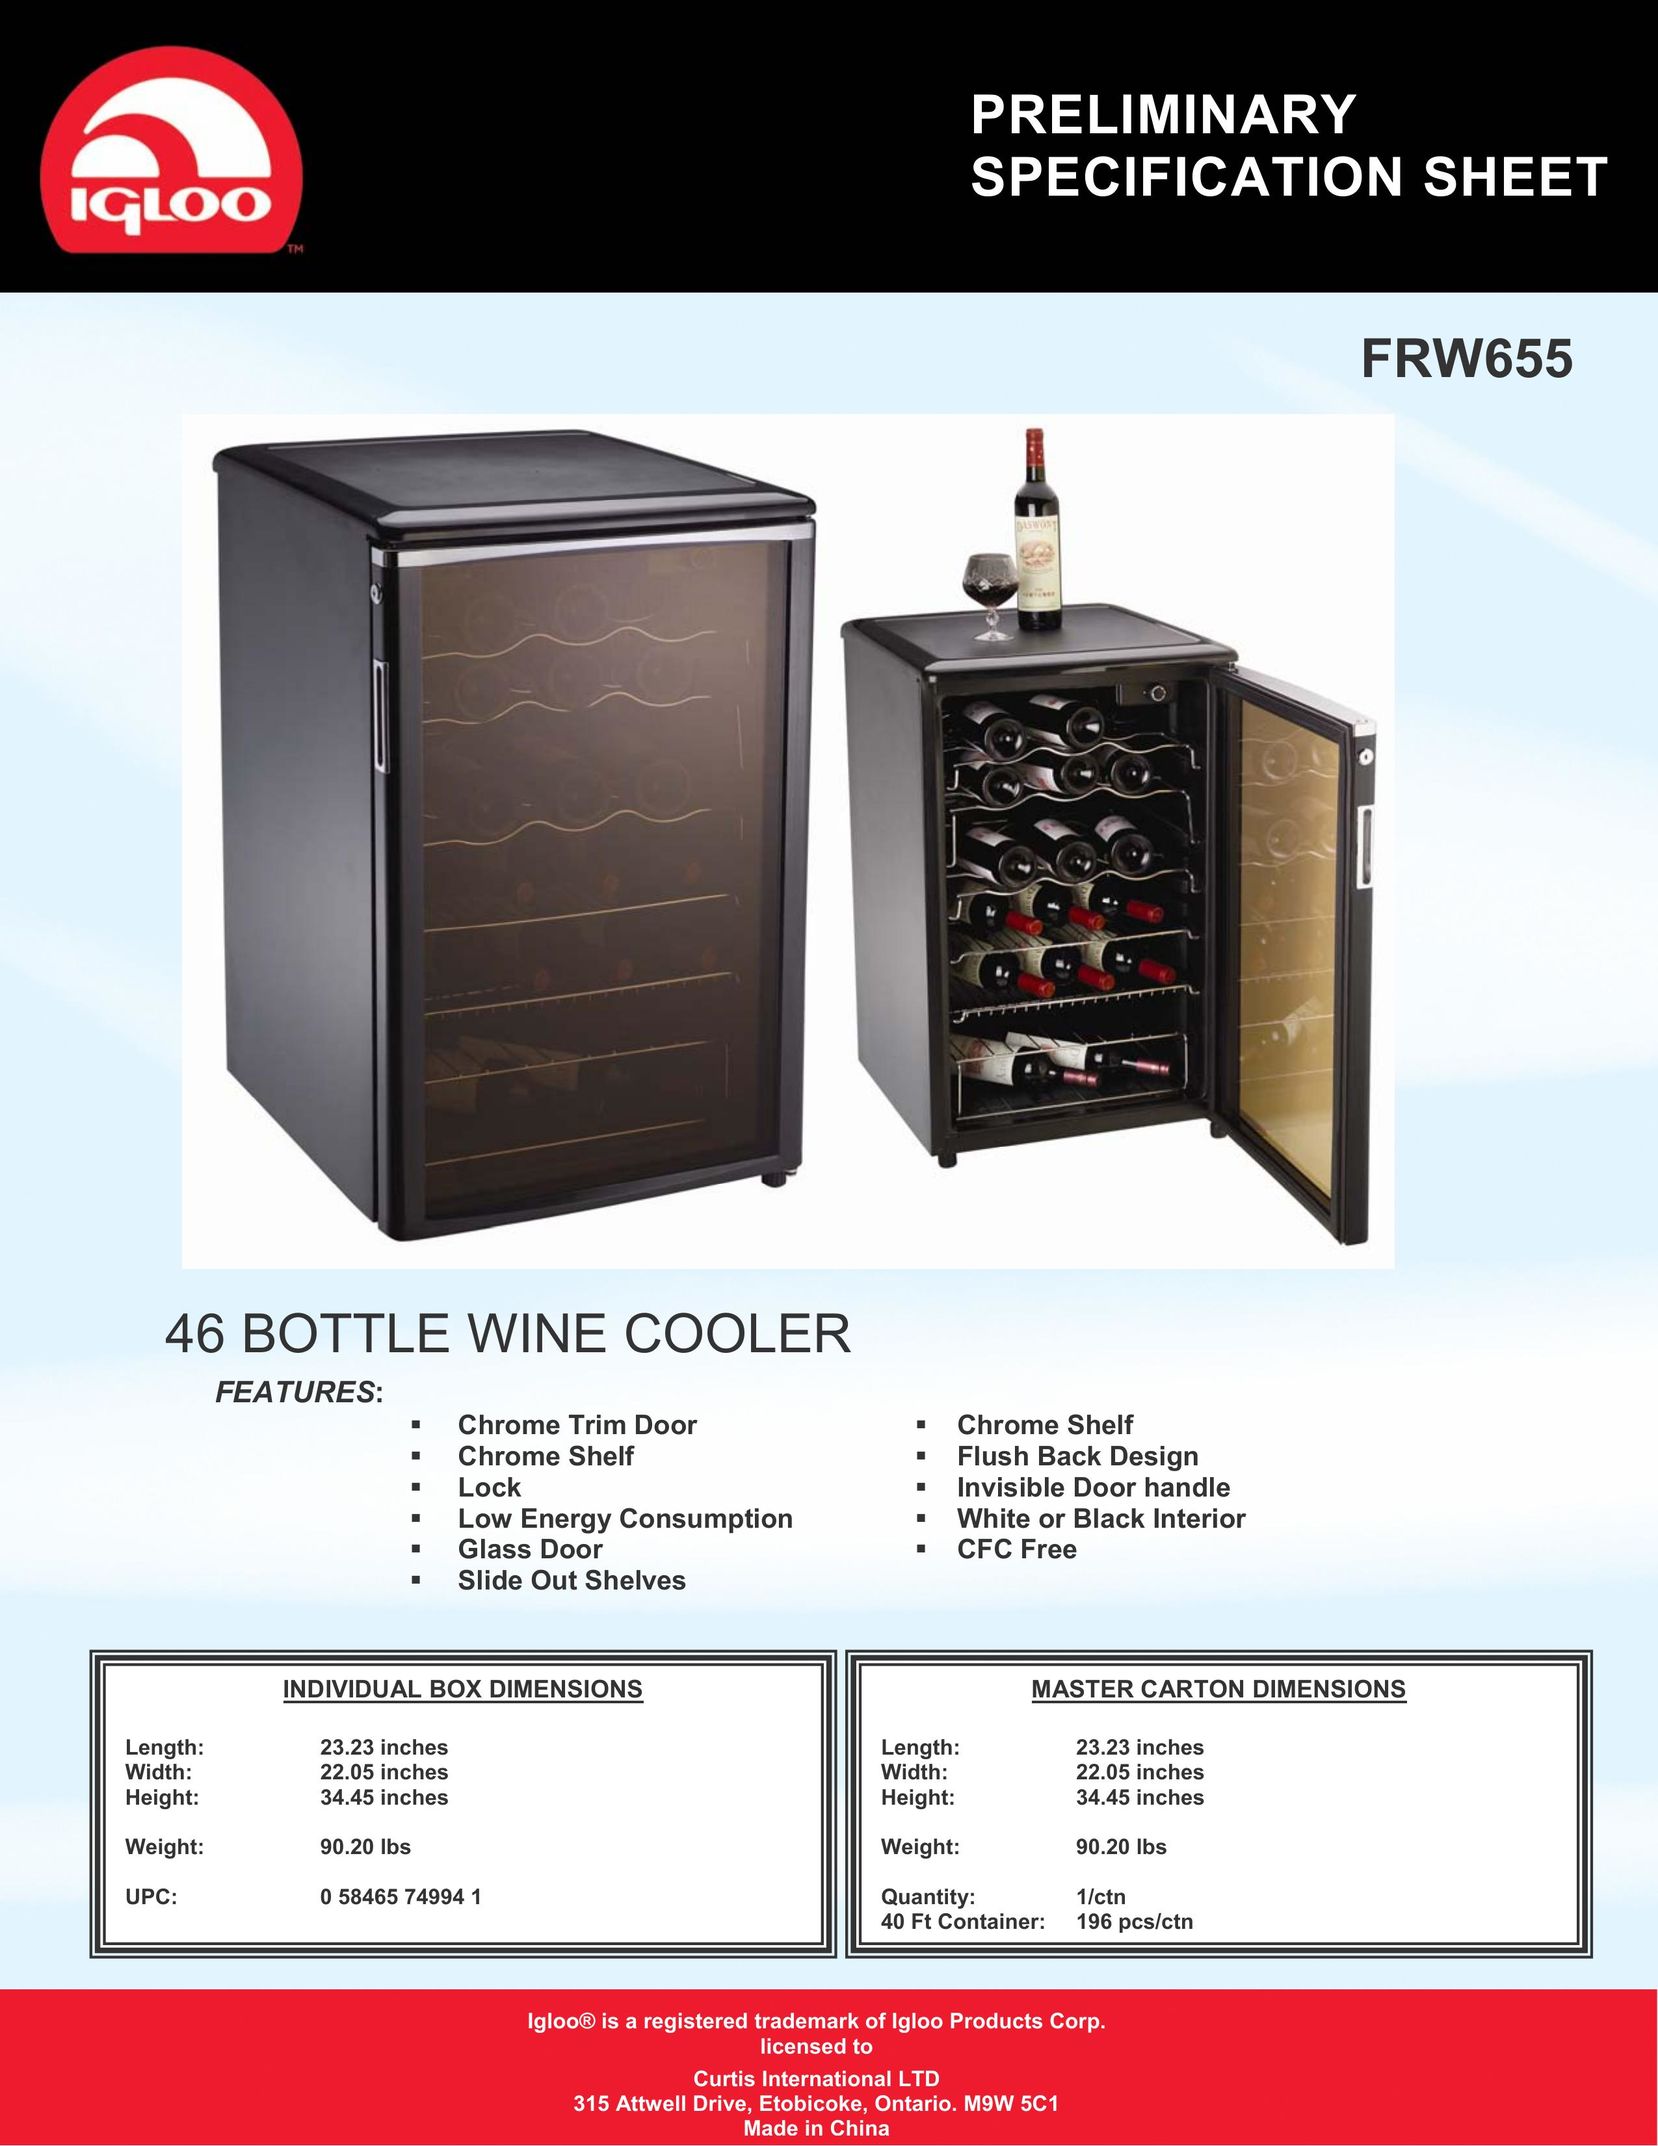 Igloo FRW655 Beverage Dispenser User Manual